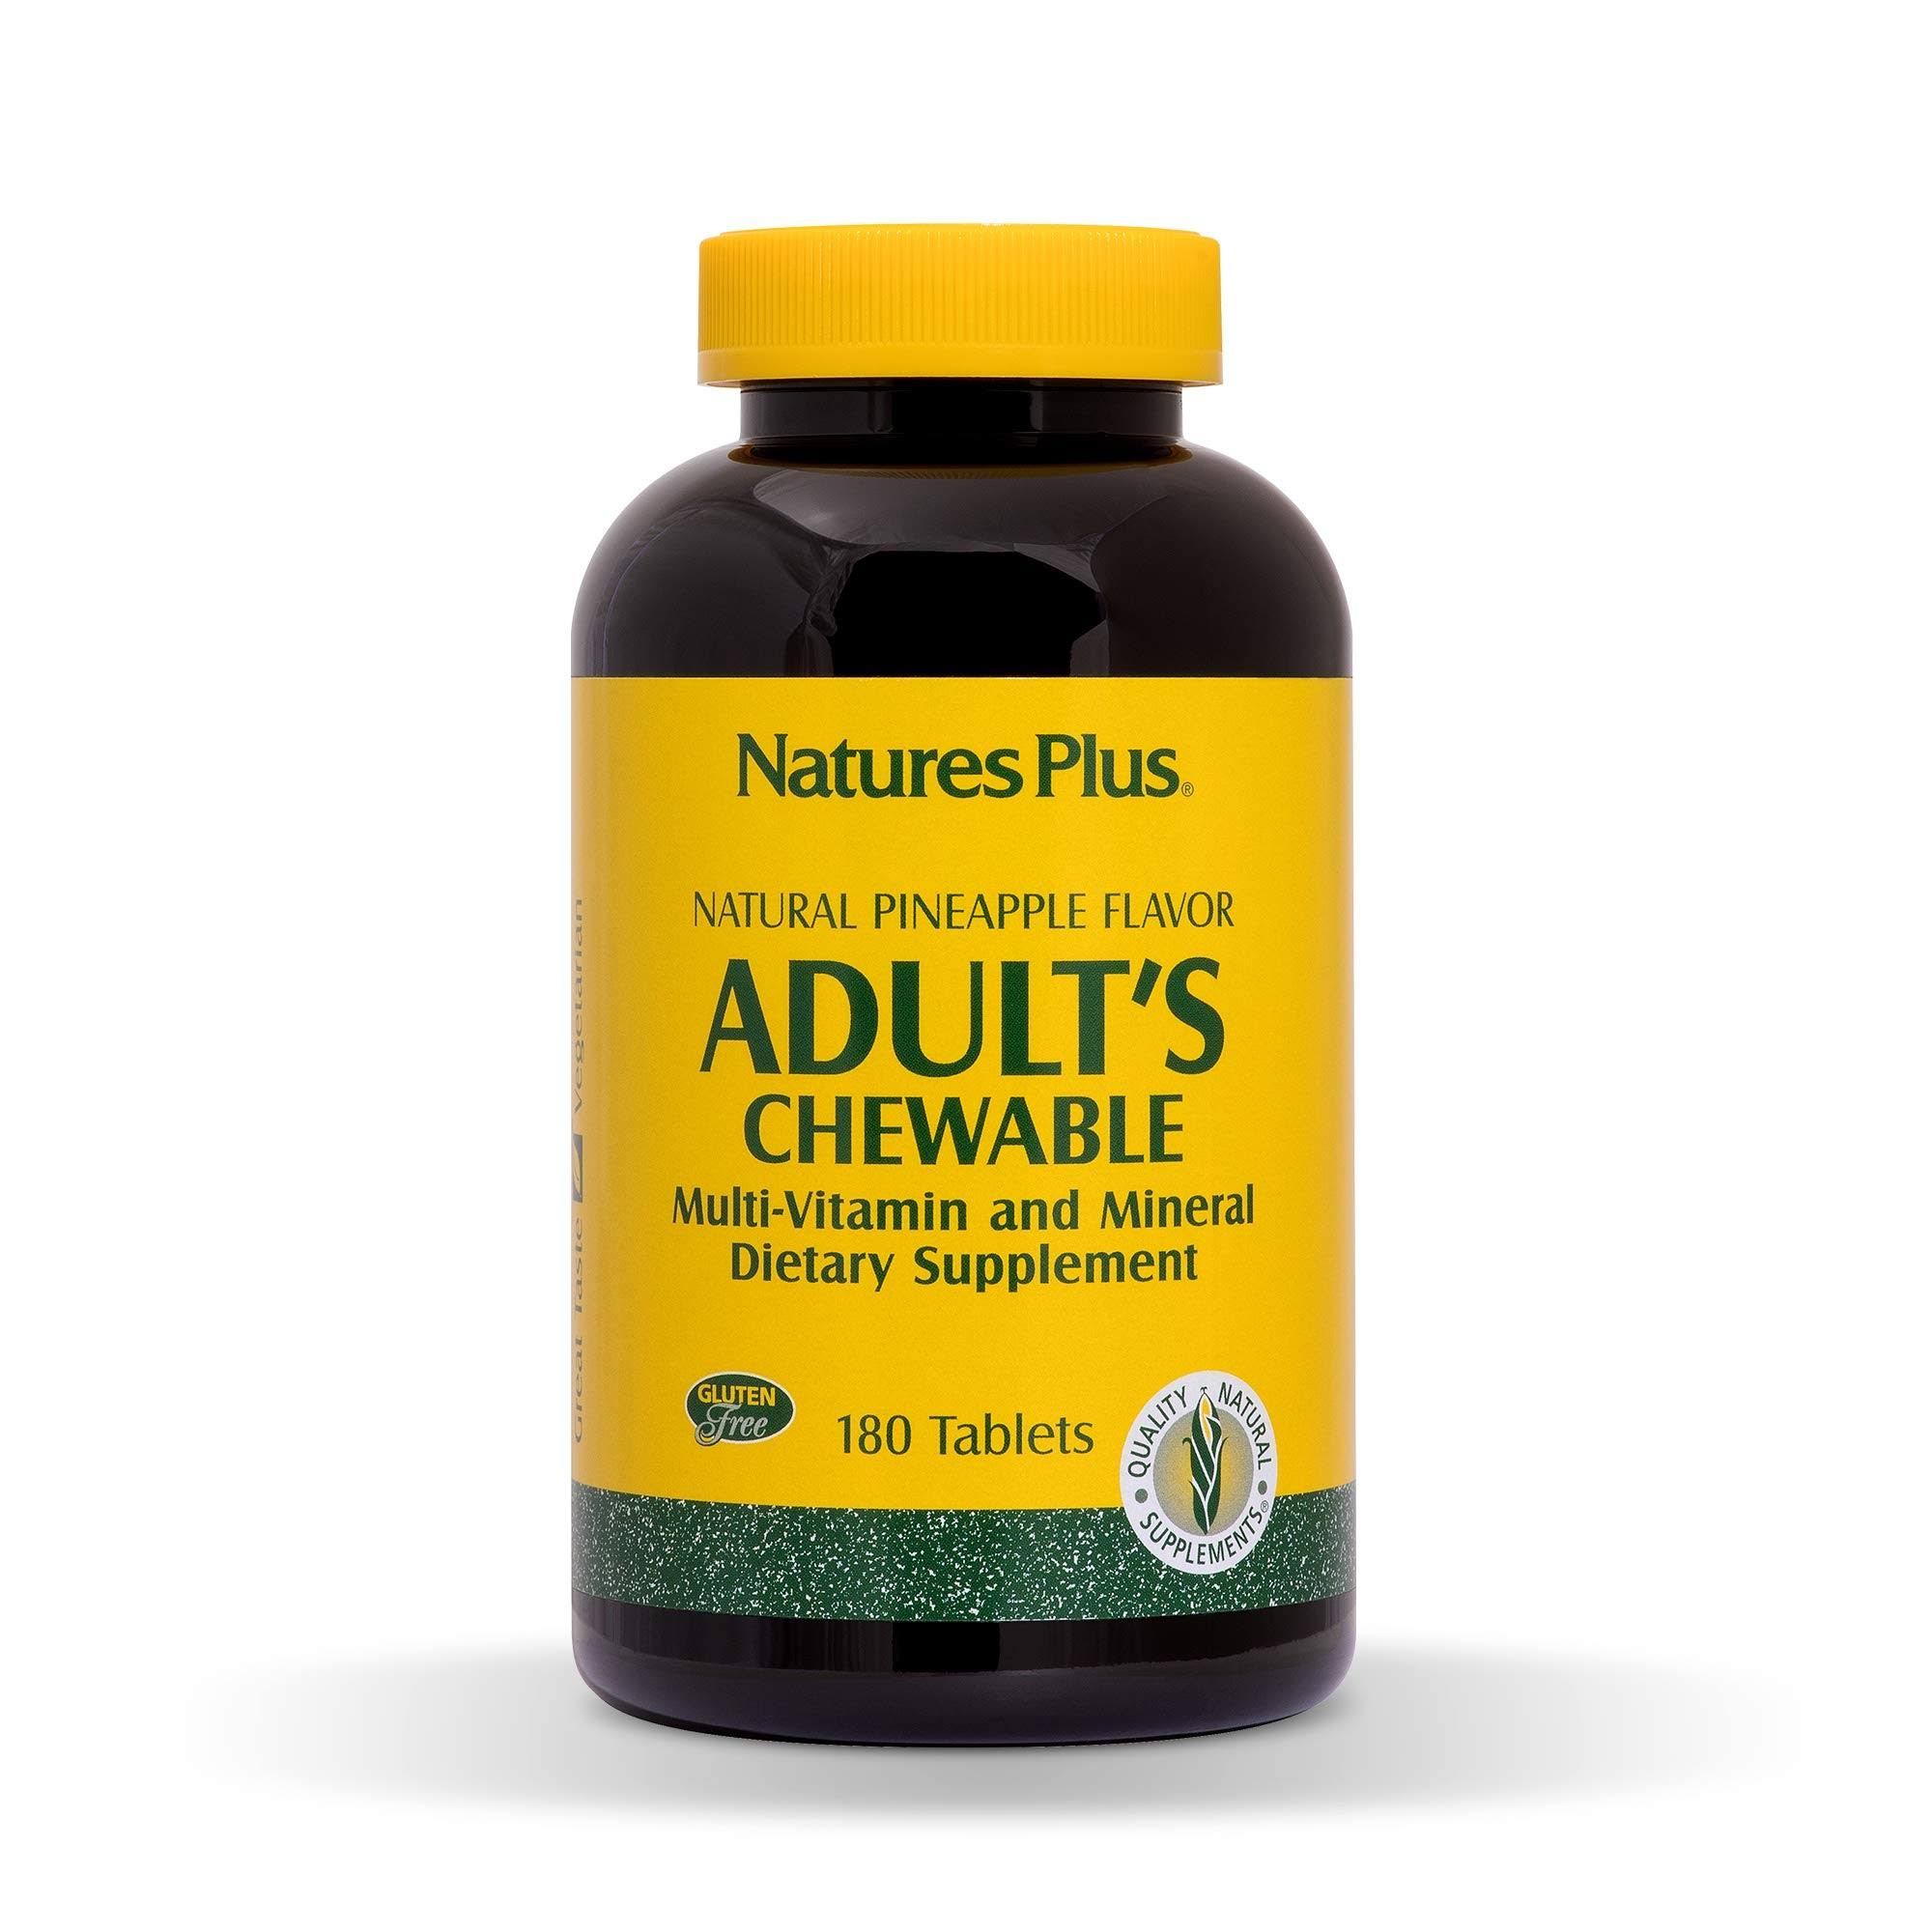 Natures Plus Adult's Chewable - Supplement, 180 Tablets